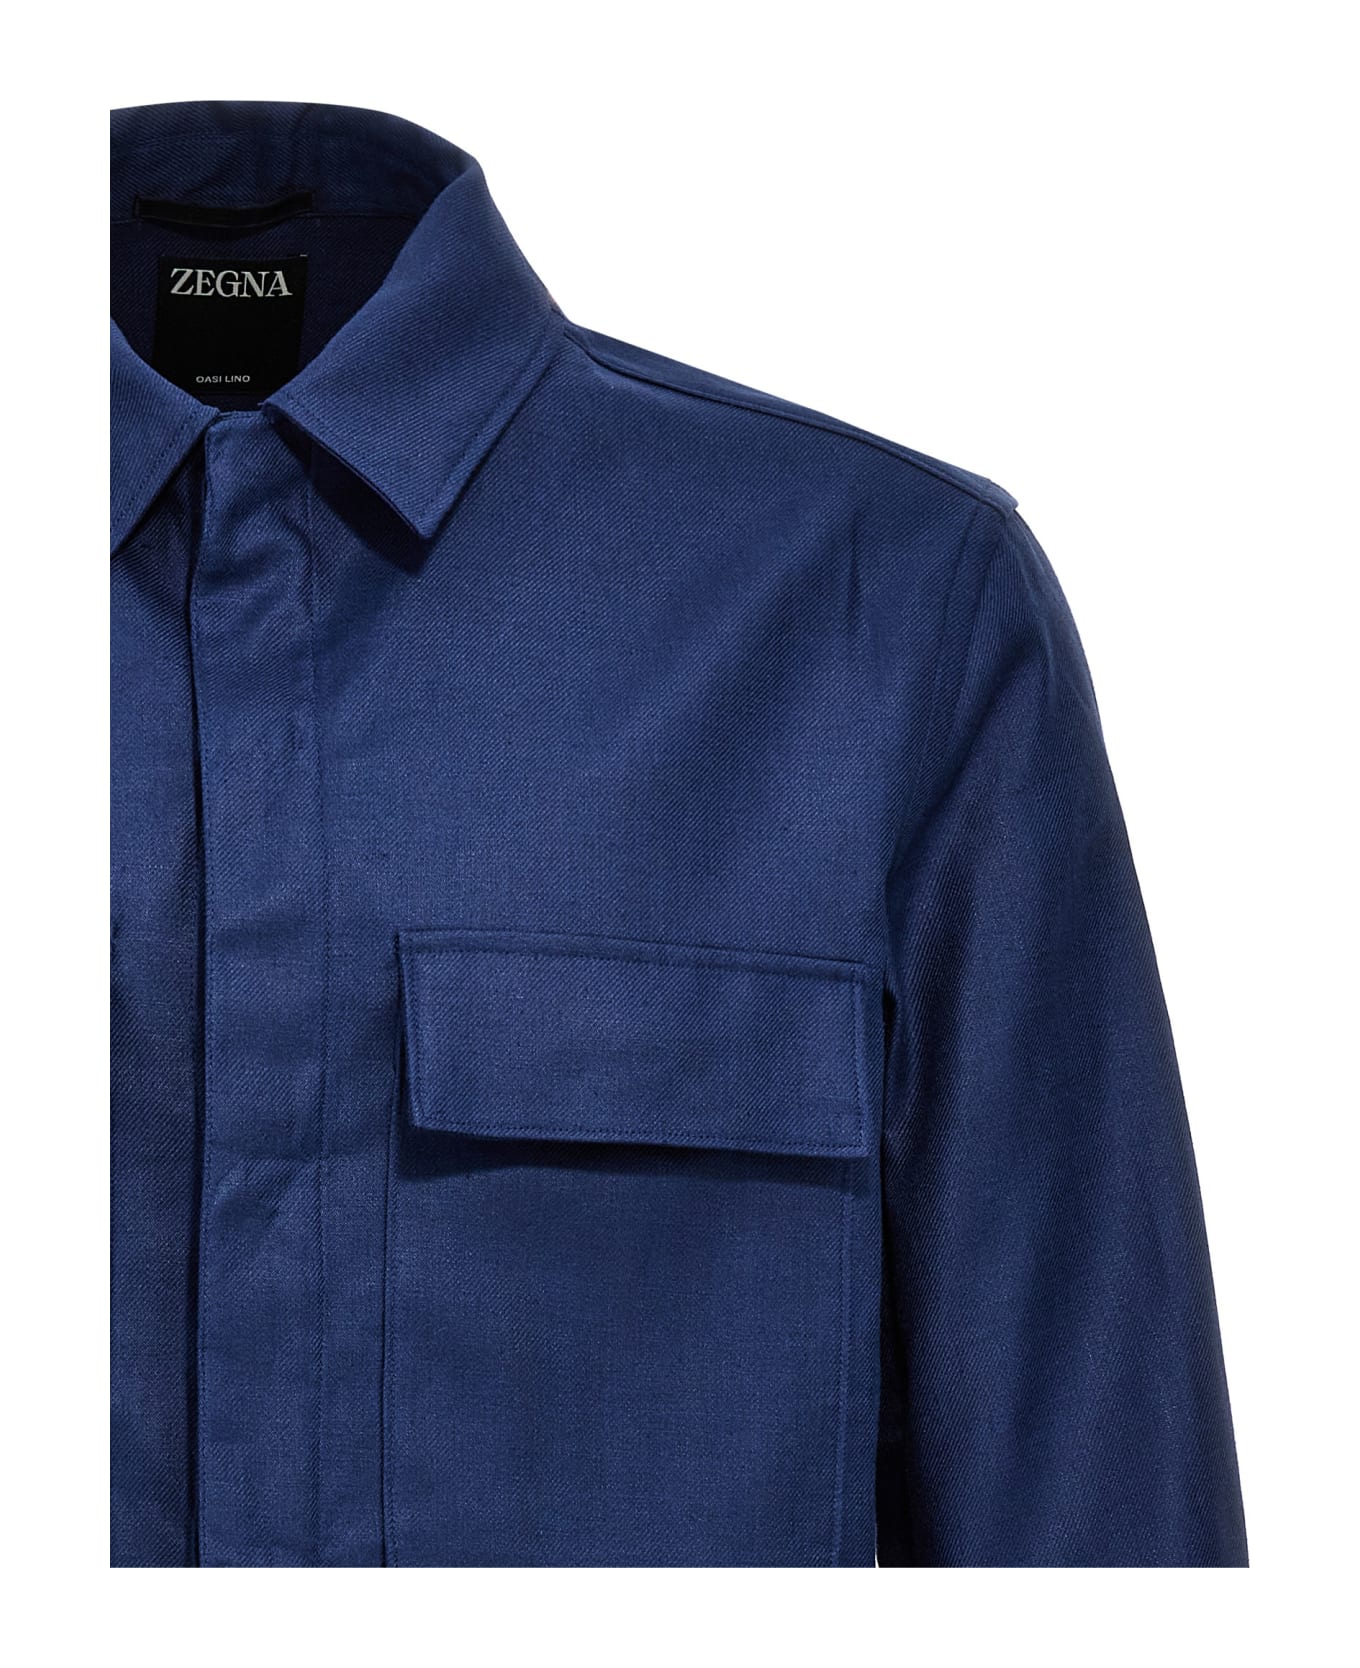 Zegna Linen Jacket - Blue ジャケット